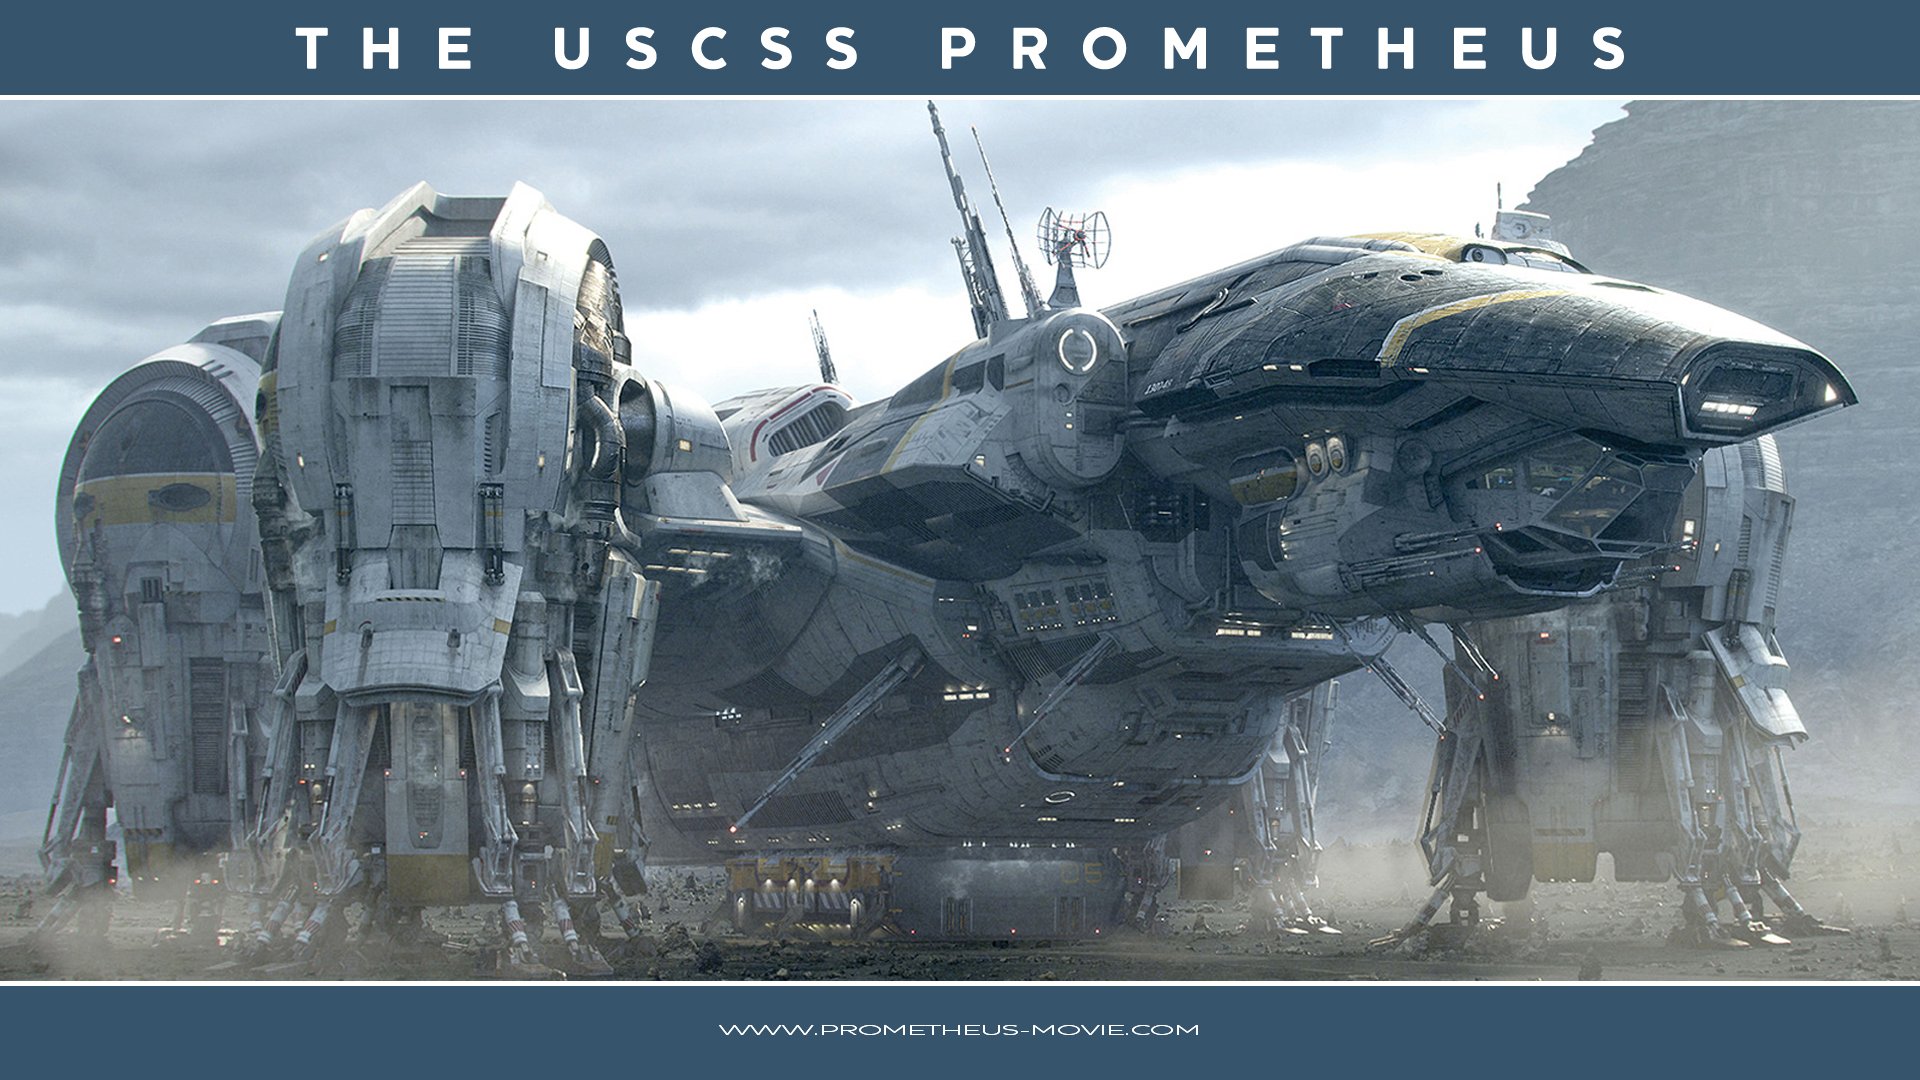 prometheus, Adventure, Mystery, Sci fi, Futuristic, Poster, Spaceship Wallpaper